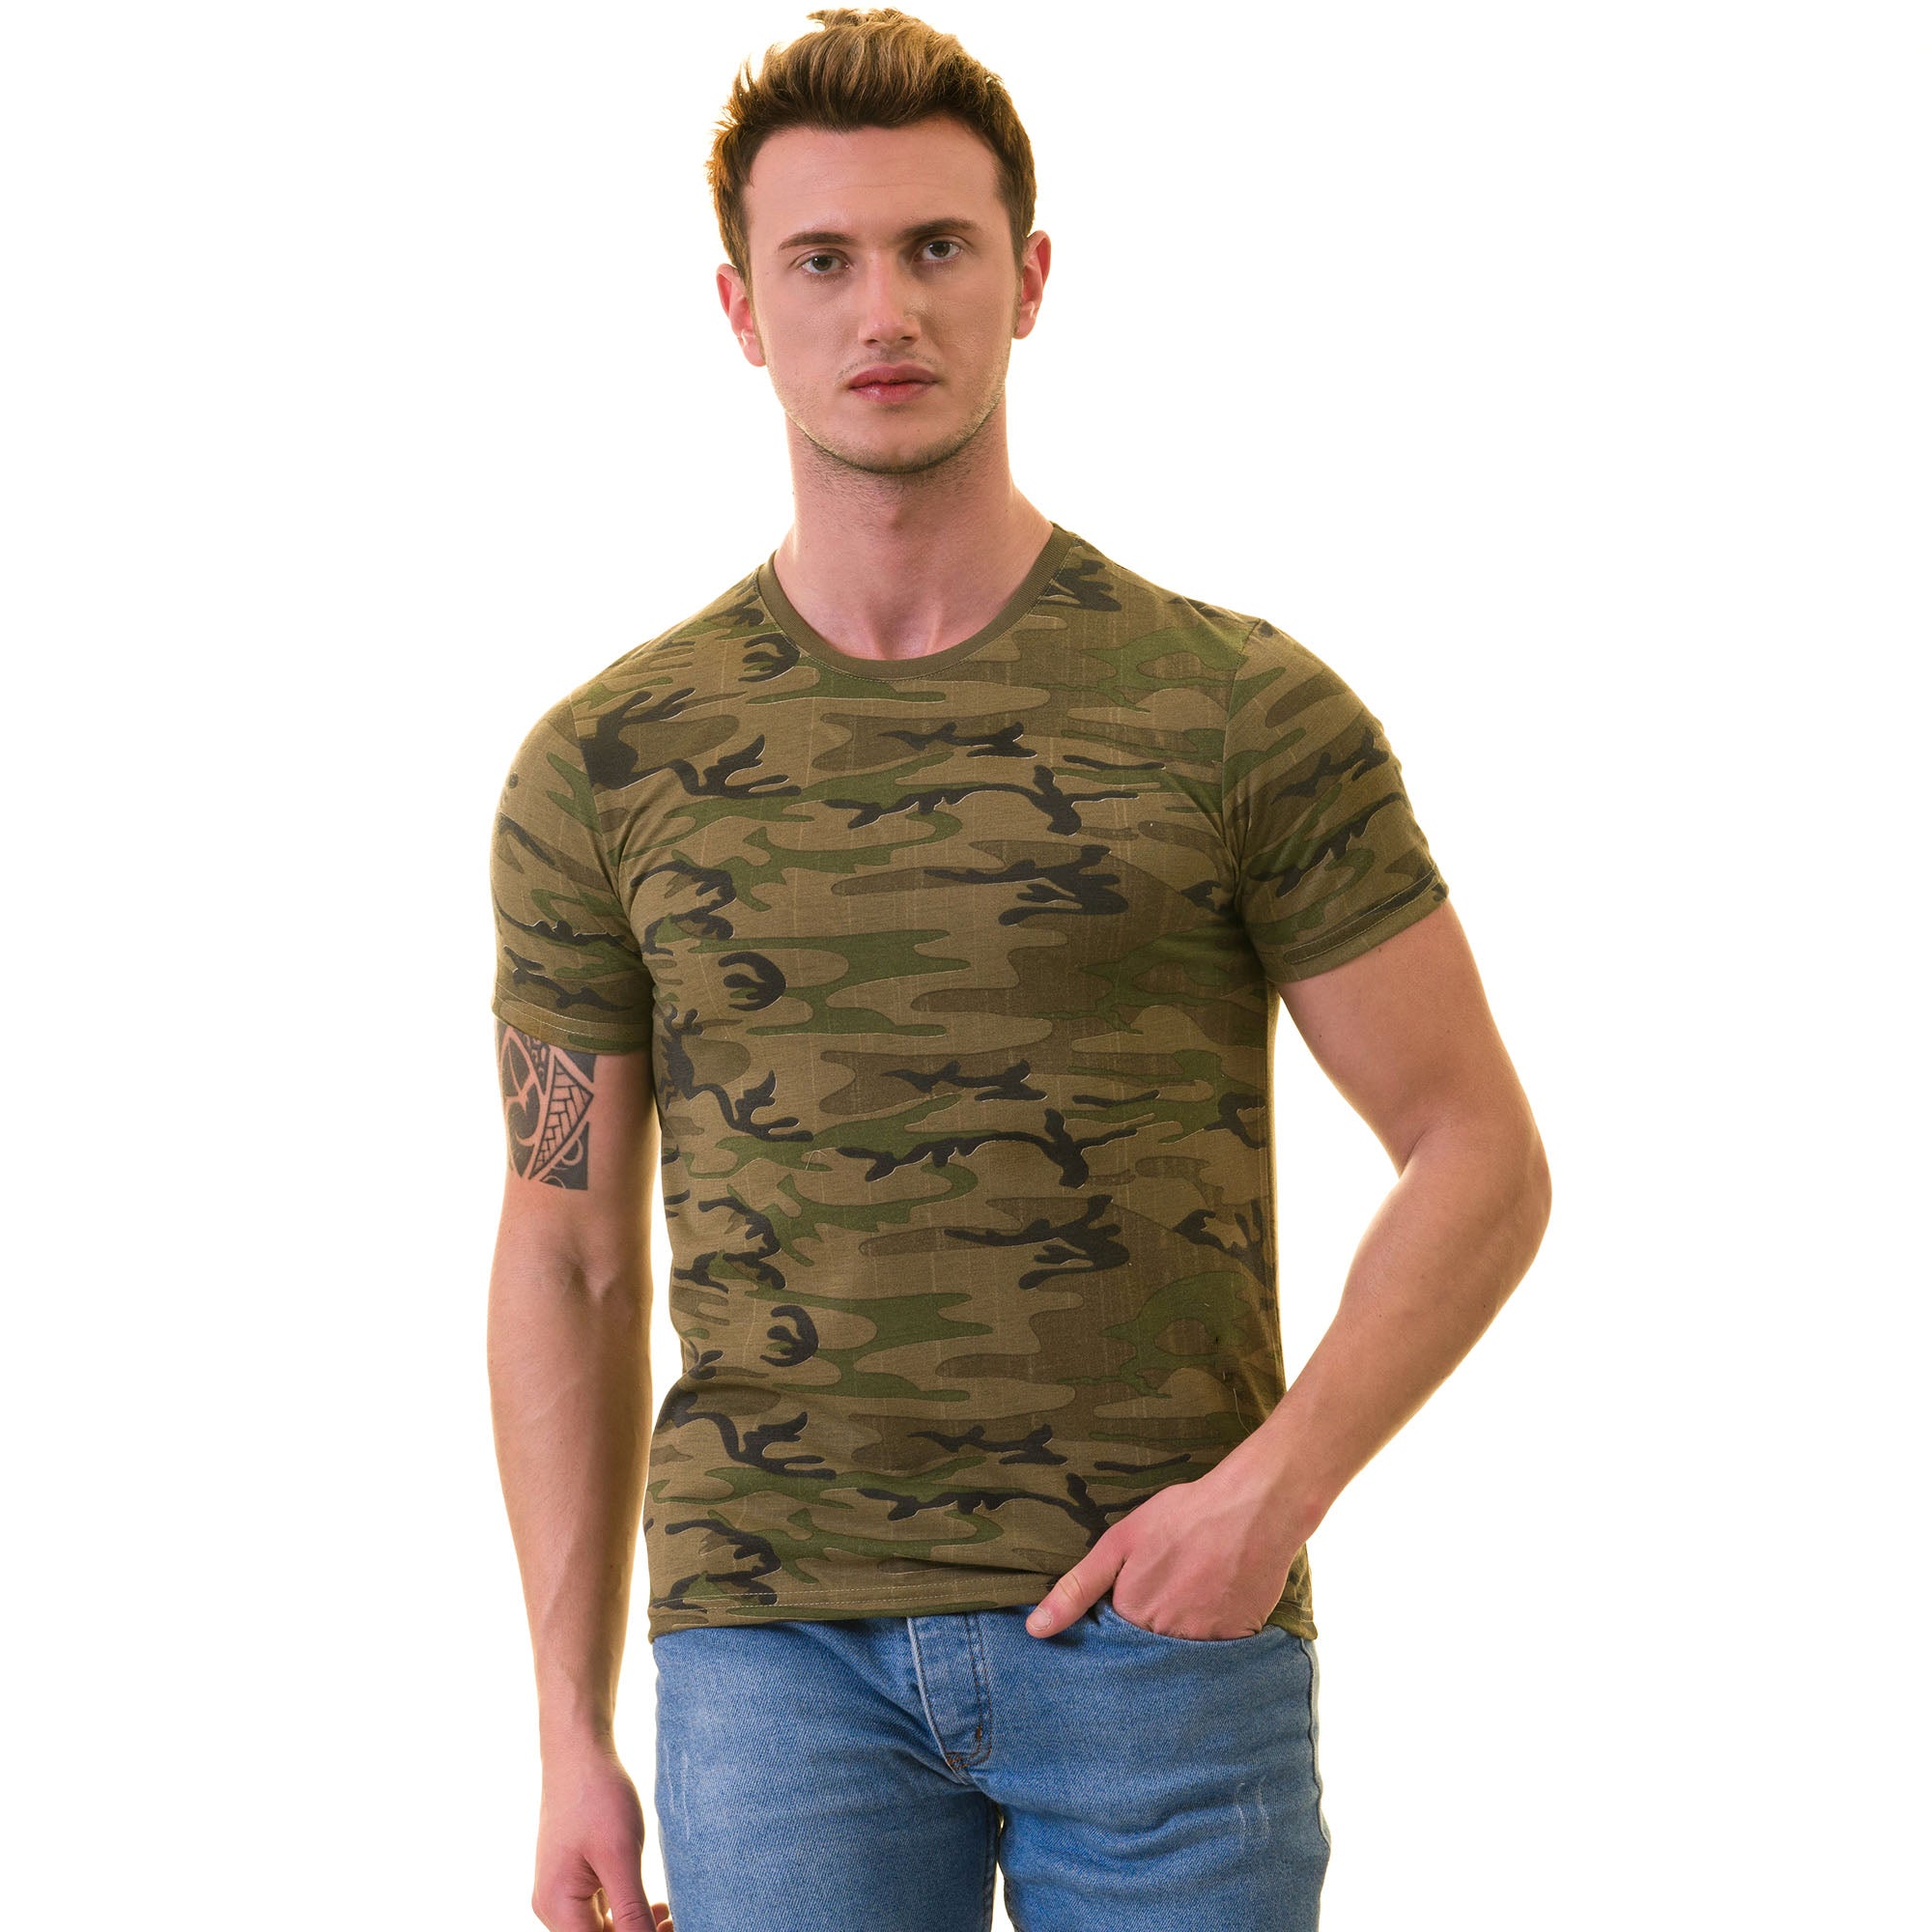 Army Camouflage European Made & Designed Premium Quality T-Shirt - Crew Neck Short Sleeve T-Shirts